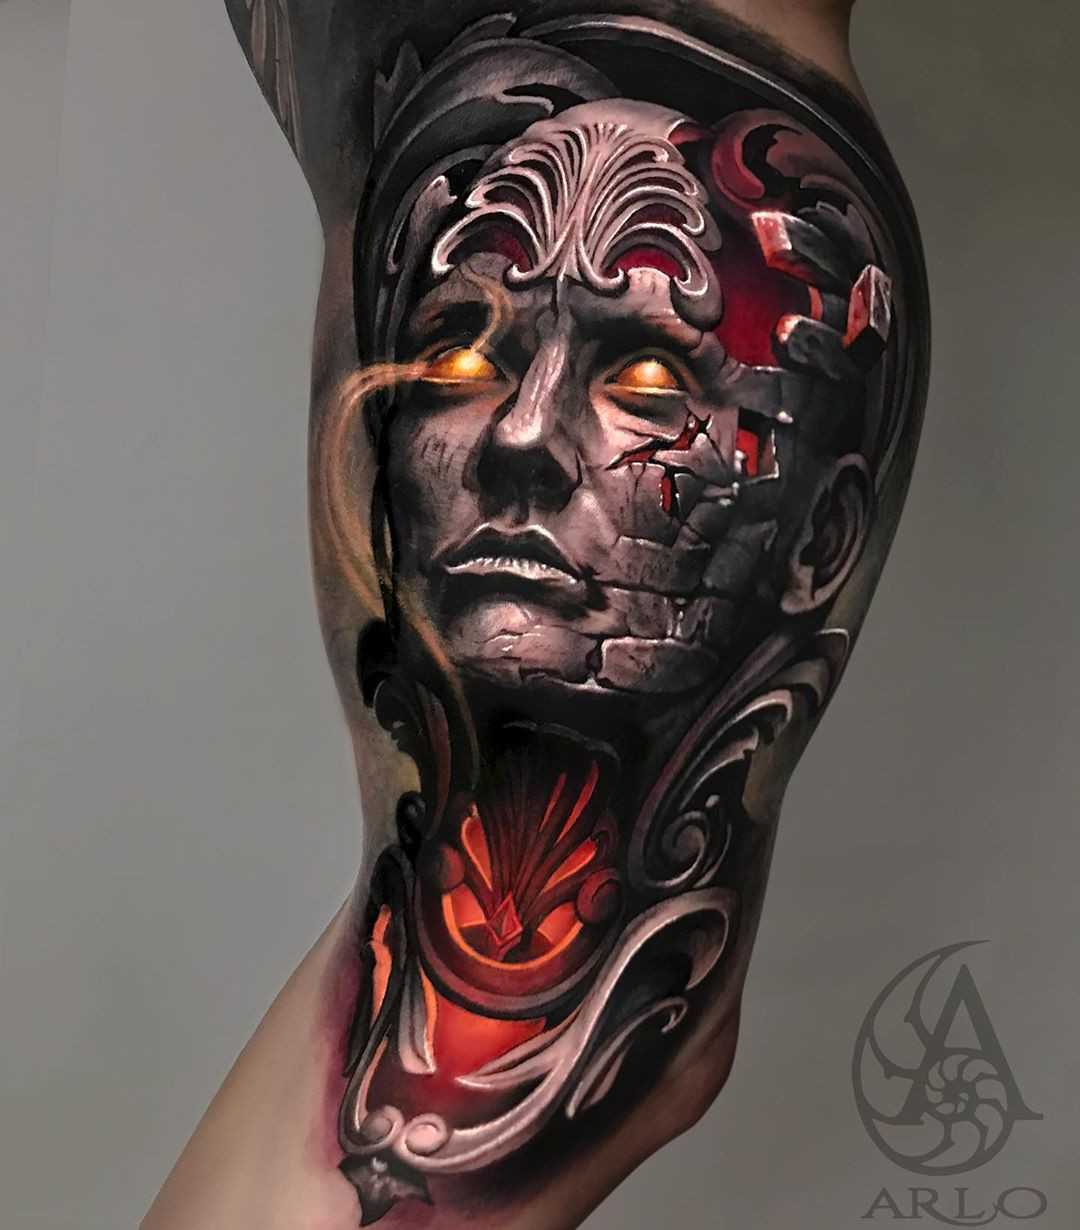 Сюрреалистические 3D-татуировки от Арло ДиКристина